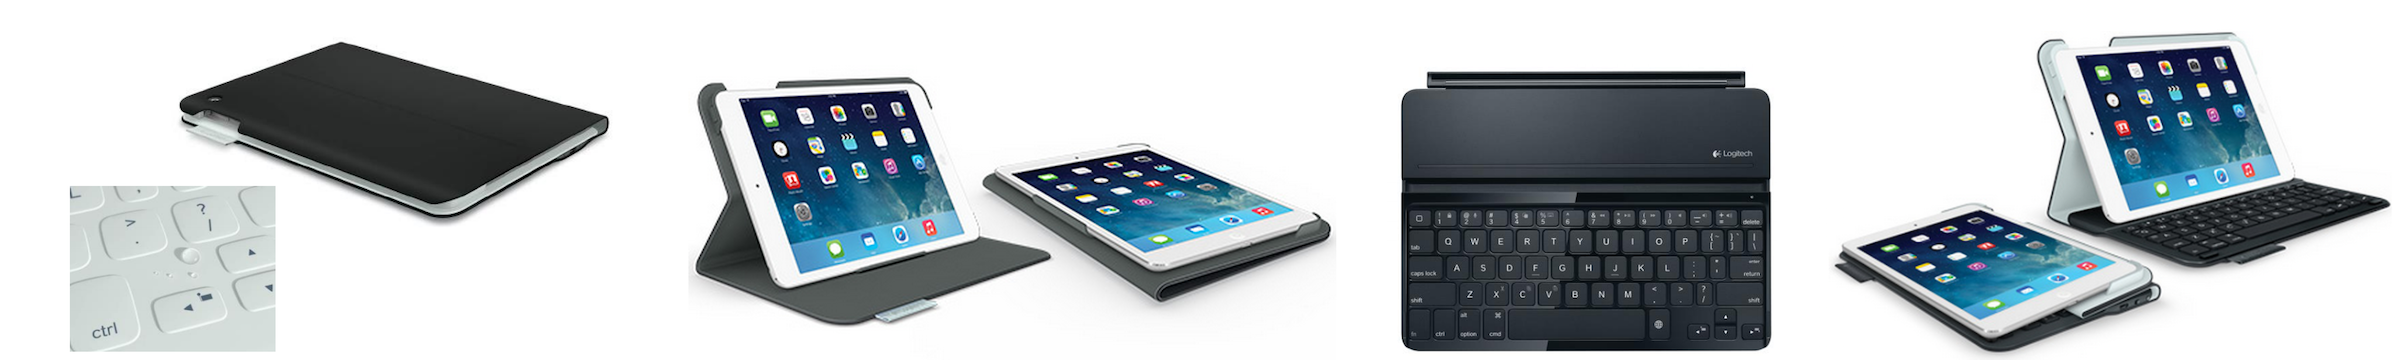 Logitech-iPad-Air-cases